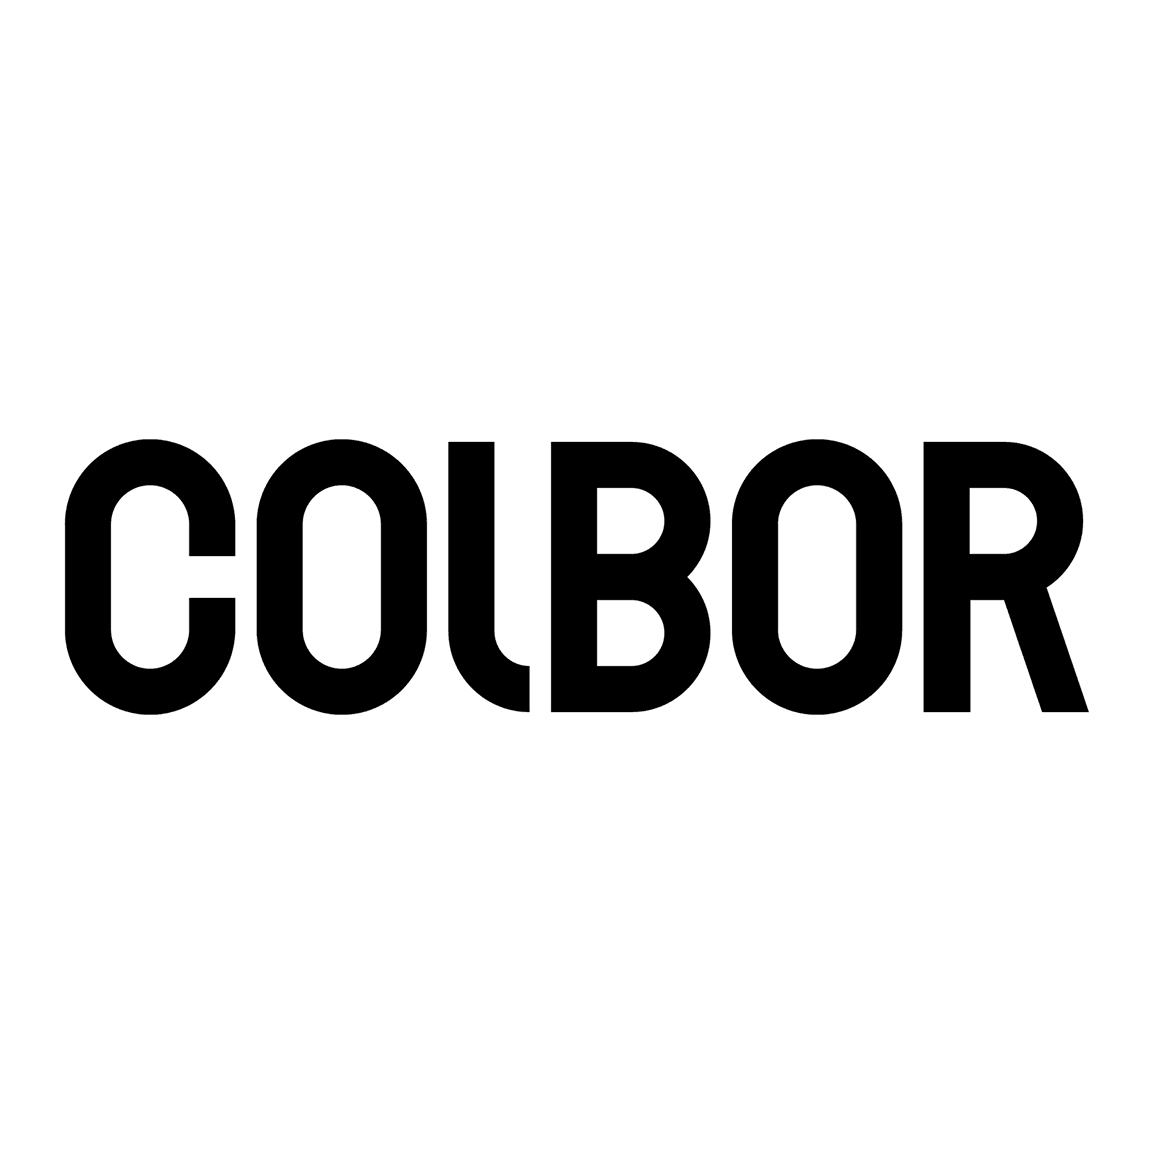 Colbor - Vitopal